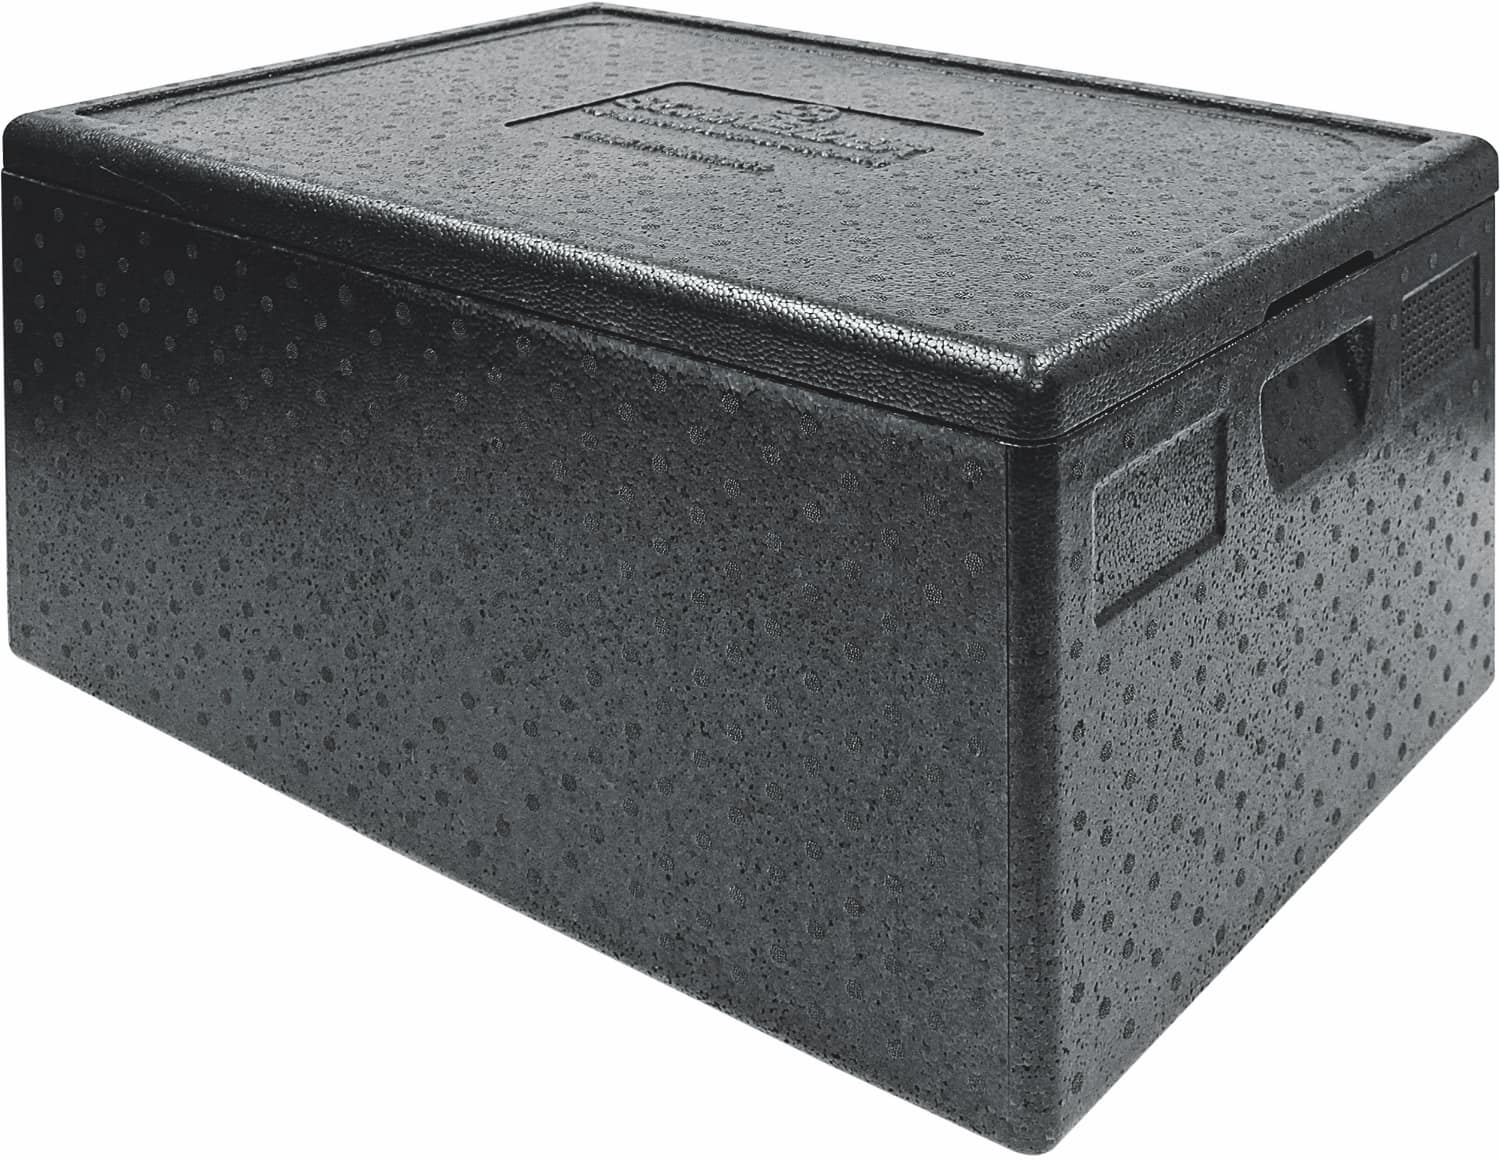 EPP insulation box TOP-BOX 40 x 60 cm